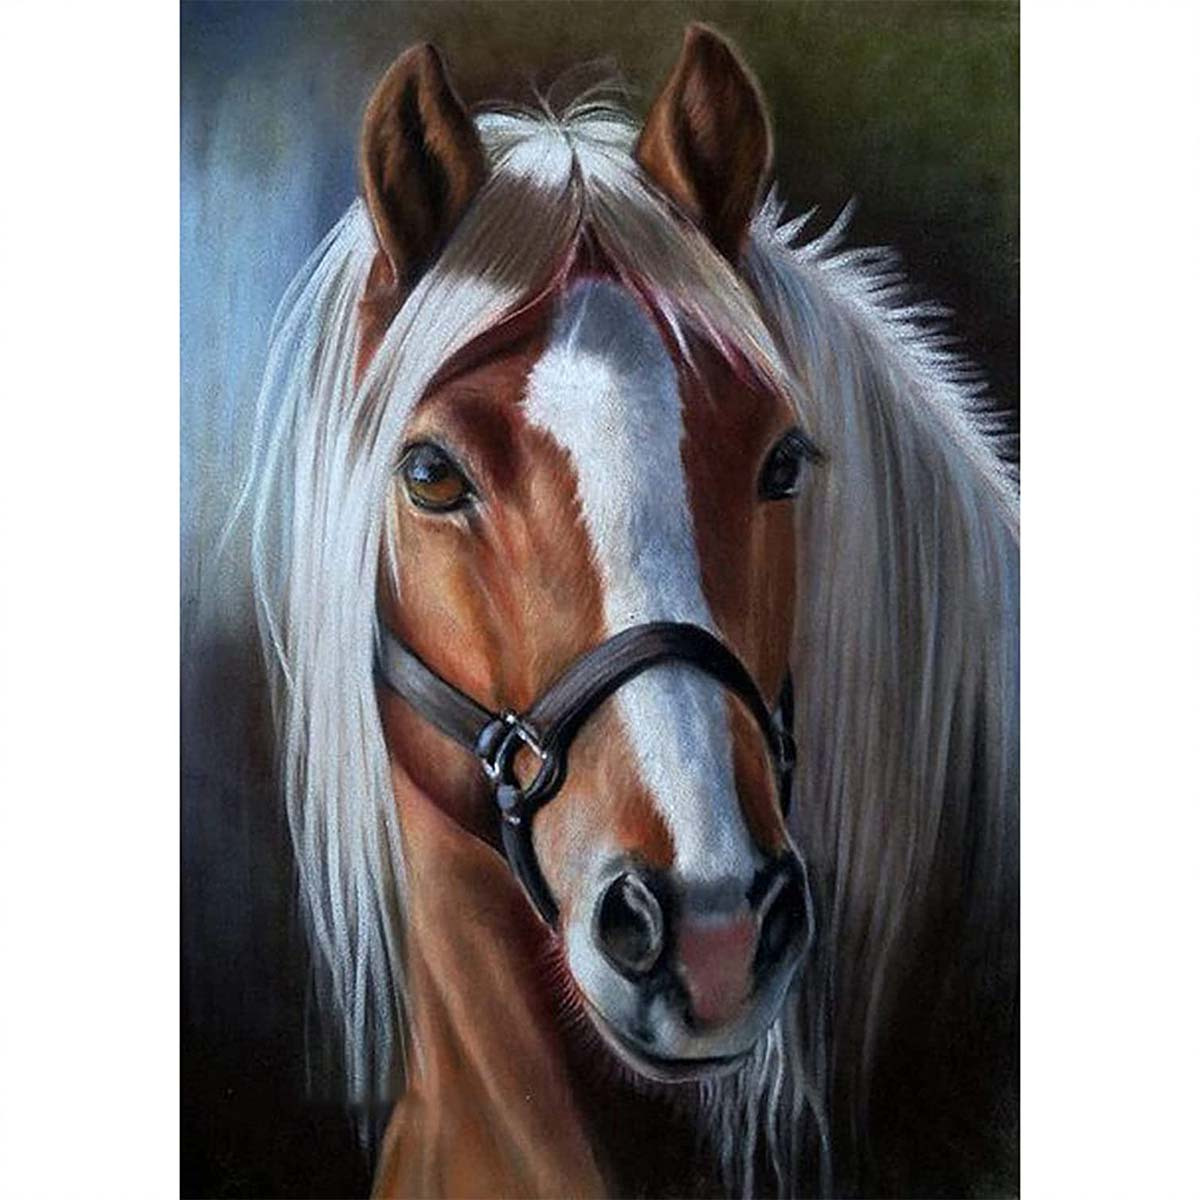 avpdupu horse diamond painting art kits for adults and kids,5d diamond  painting horse kits for